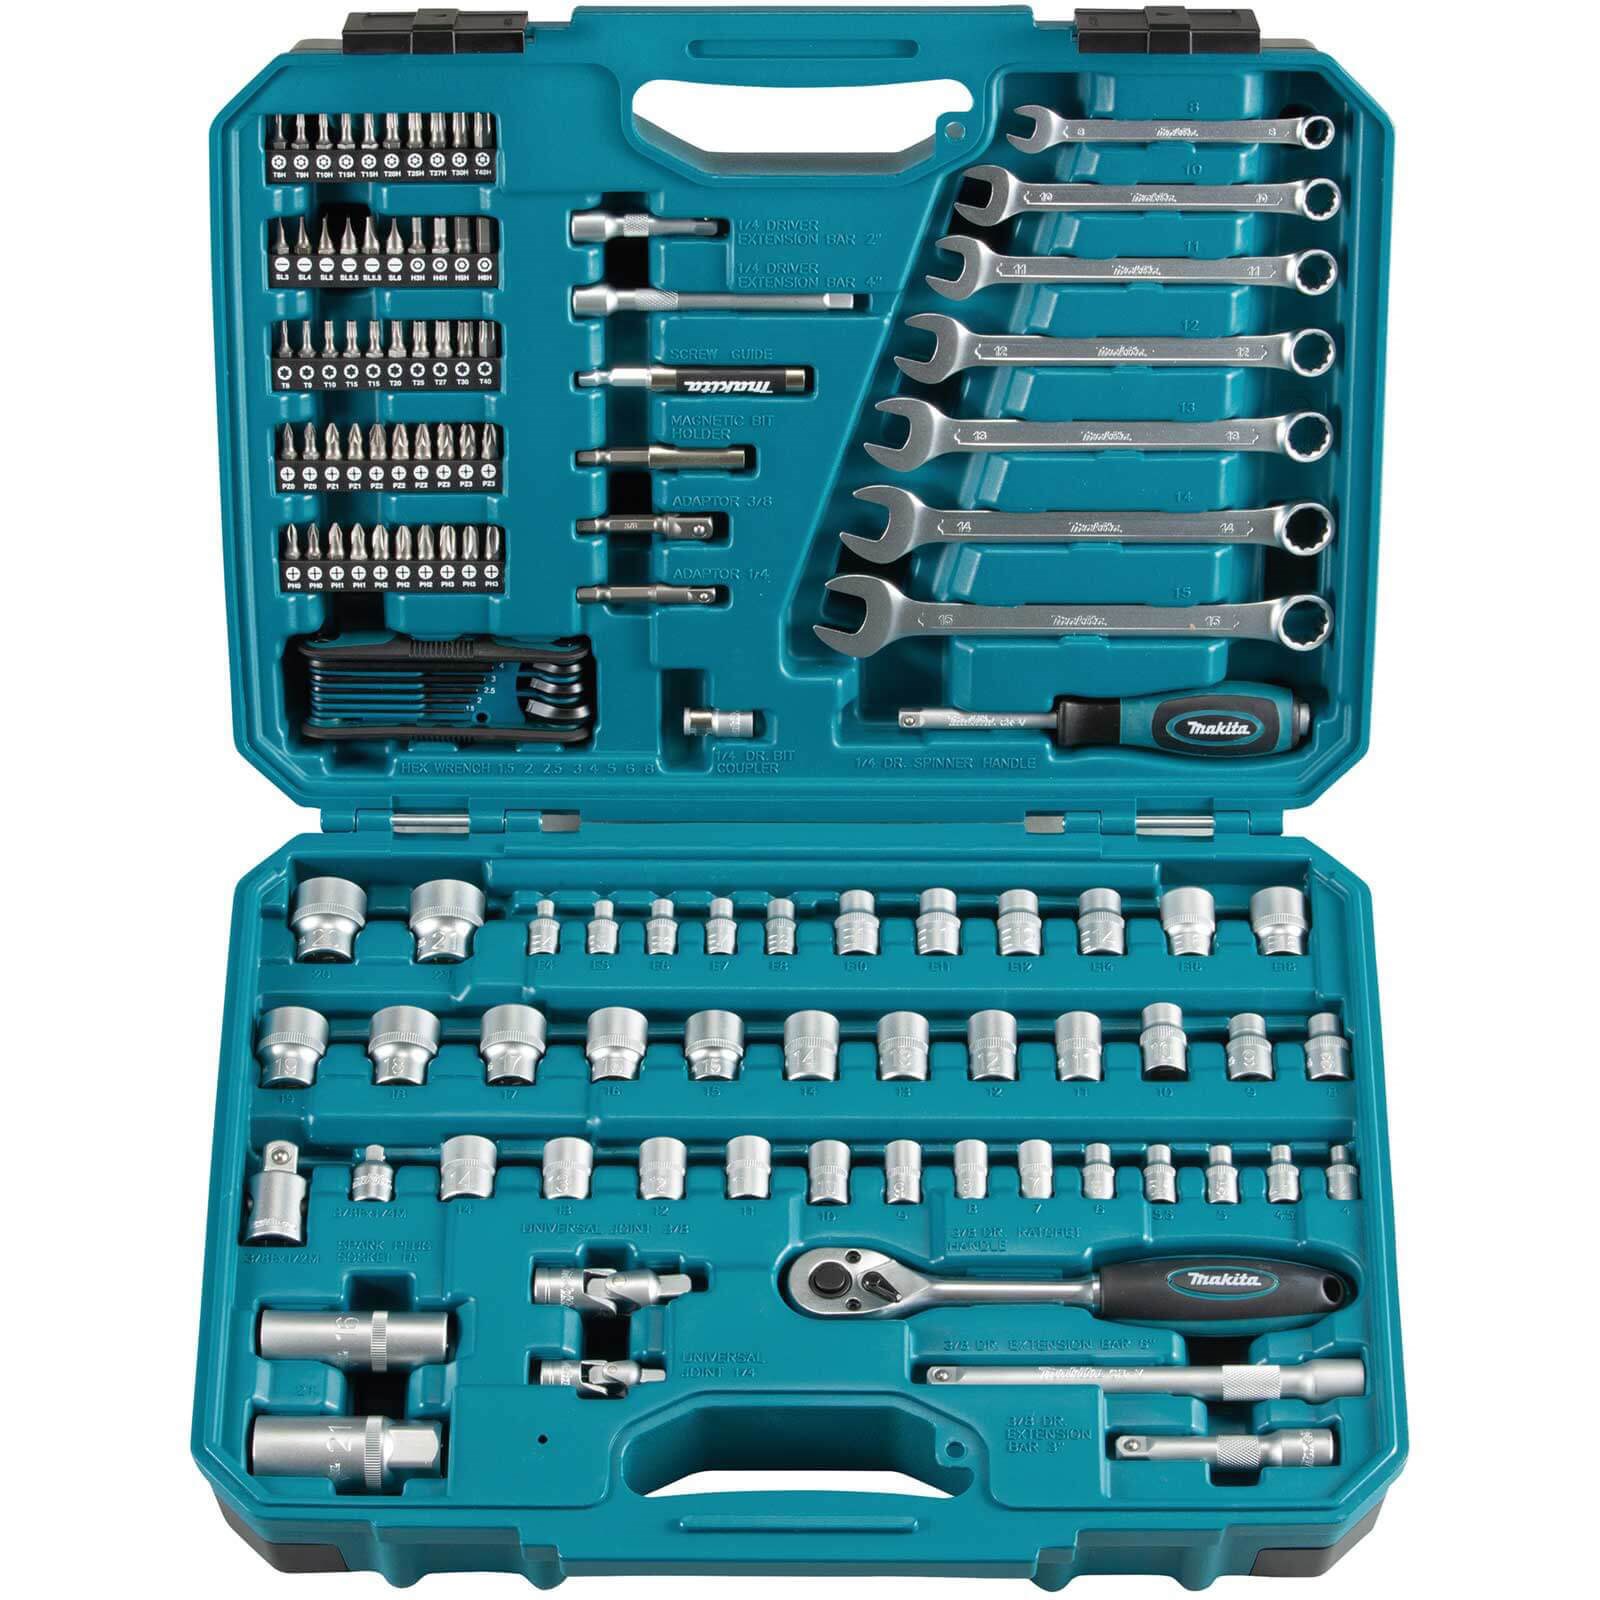 120 Socket and Maintenance Tool Set | Tool Kits